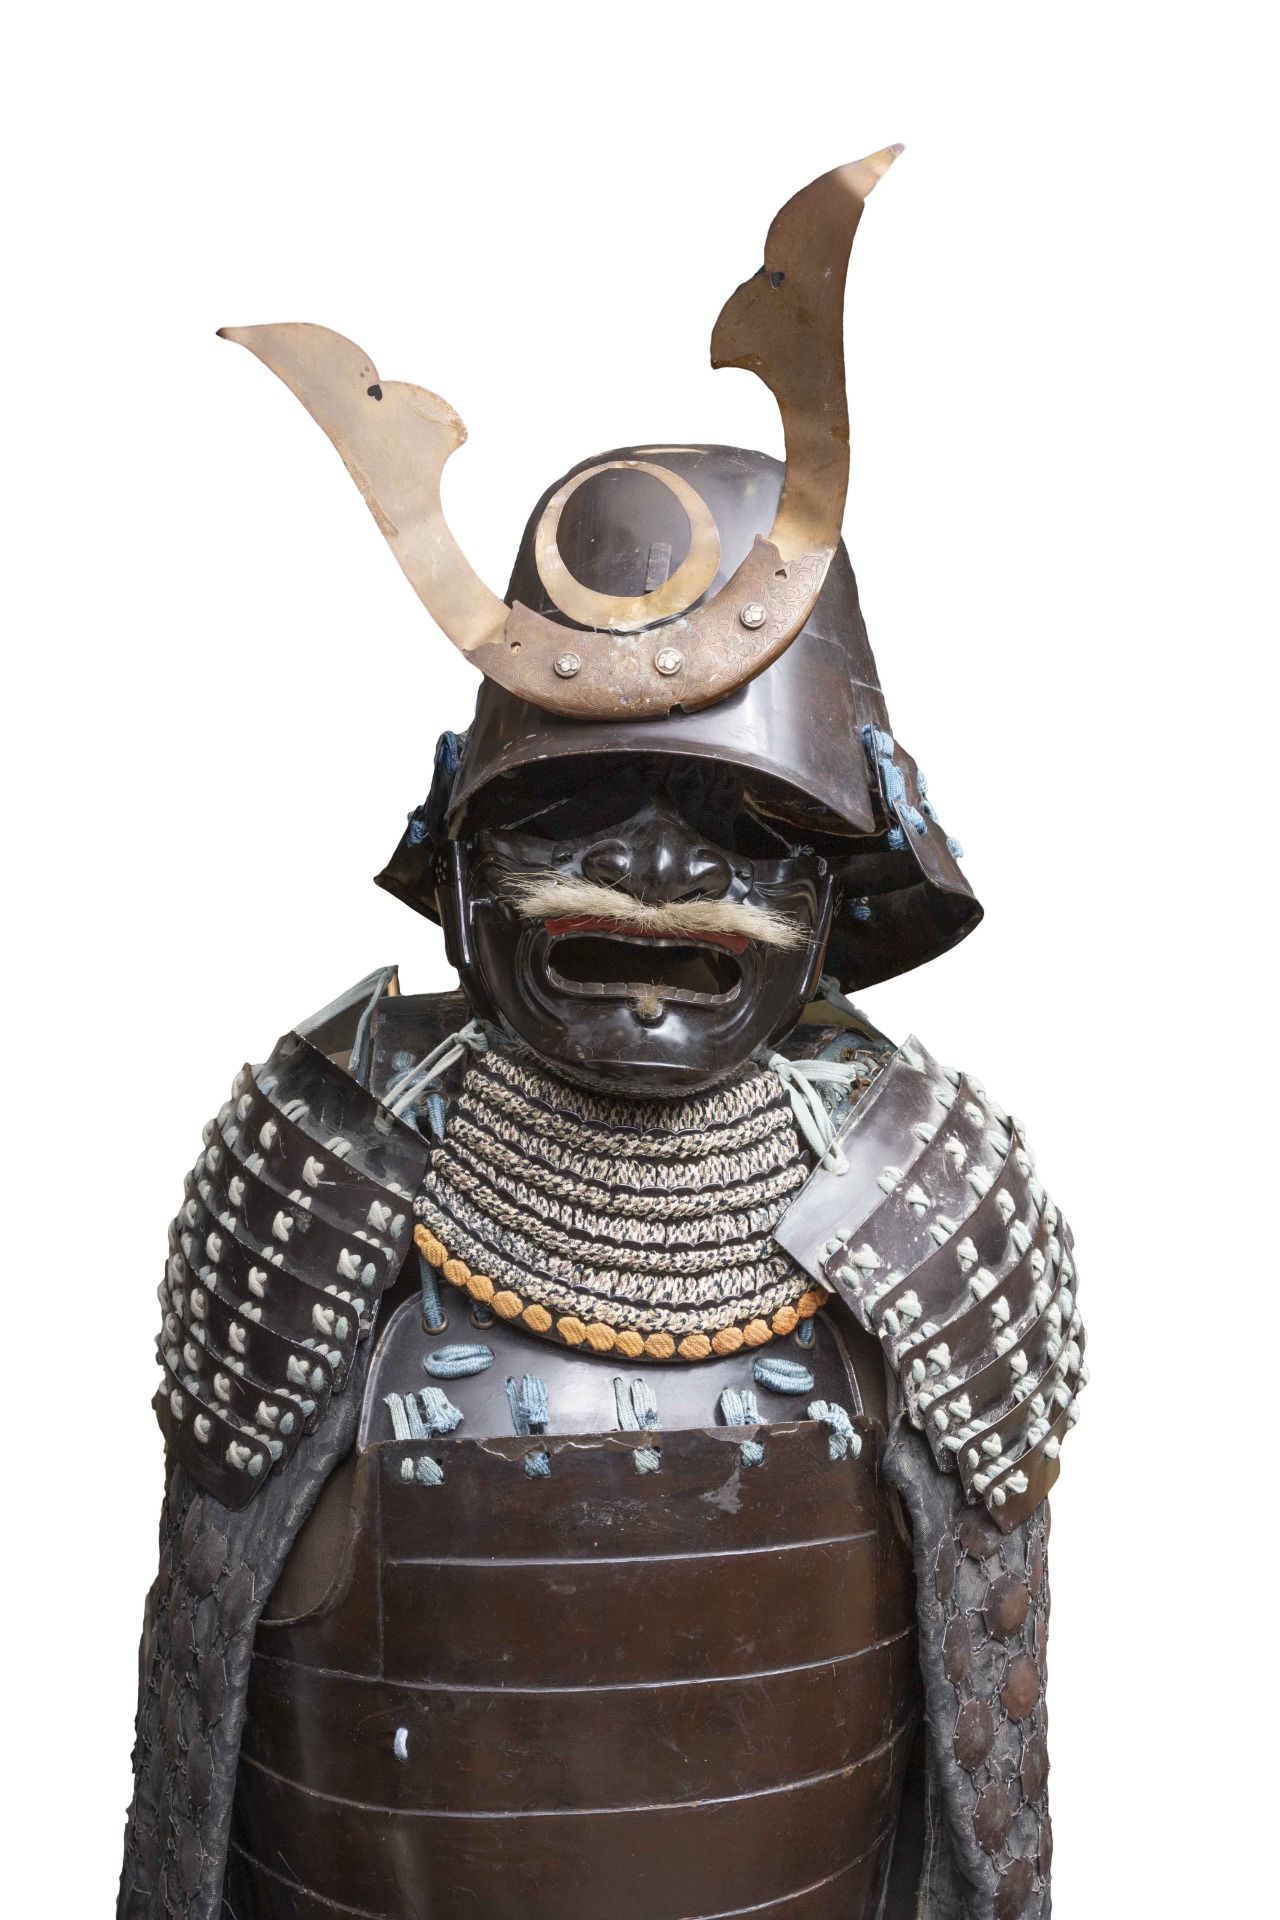 Samurai Rüstung Yoroi - Image 2 of 2